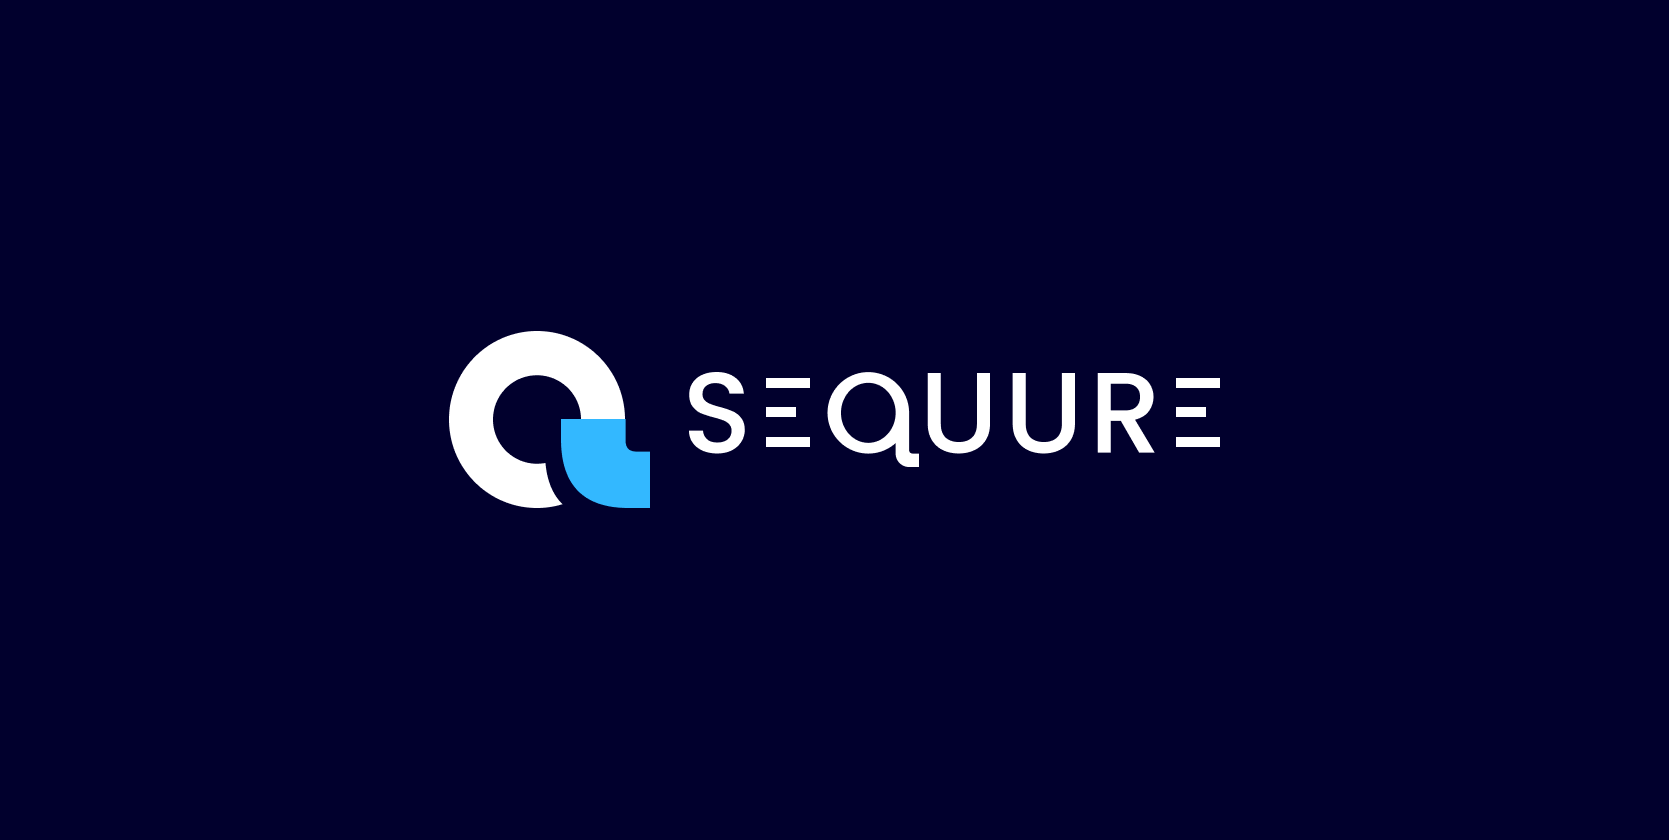 The Sequure logo on dark backgrounds